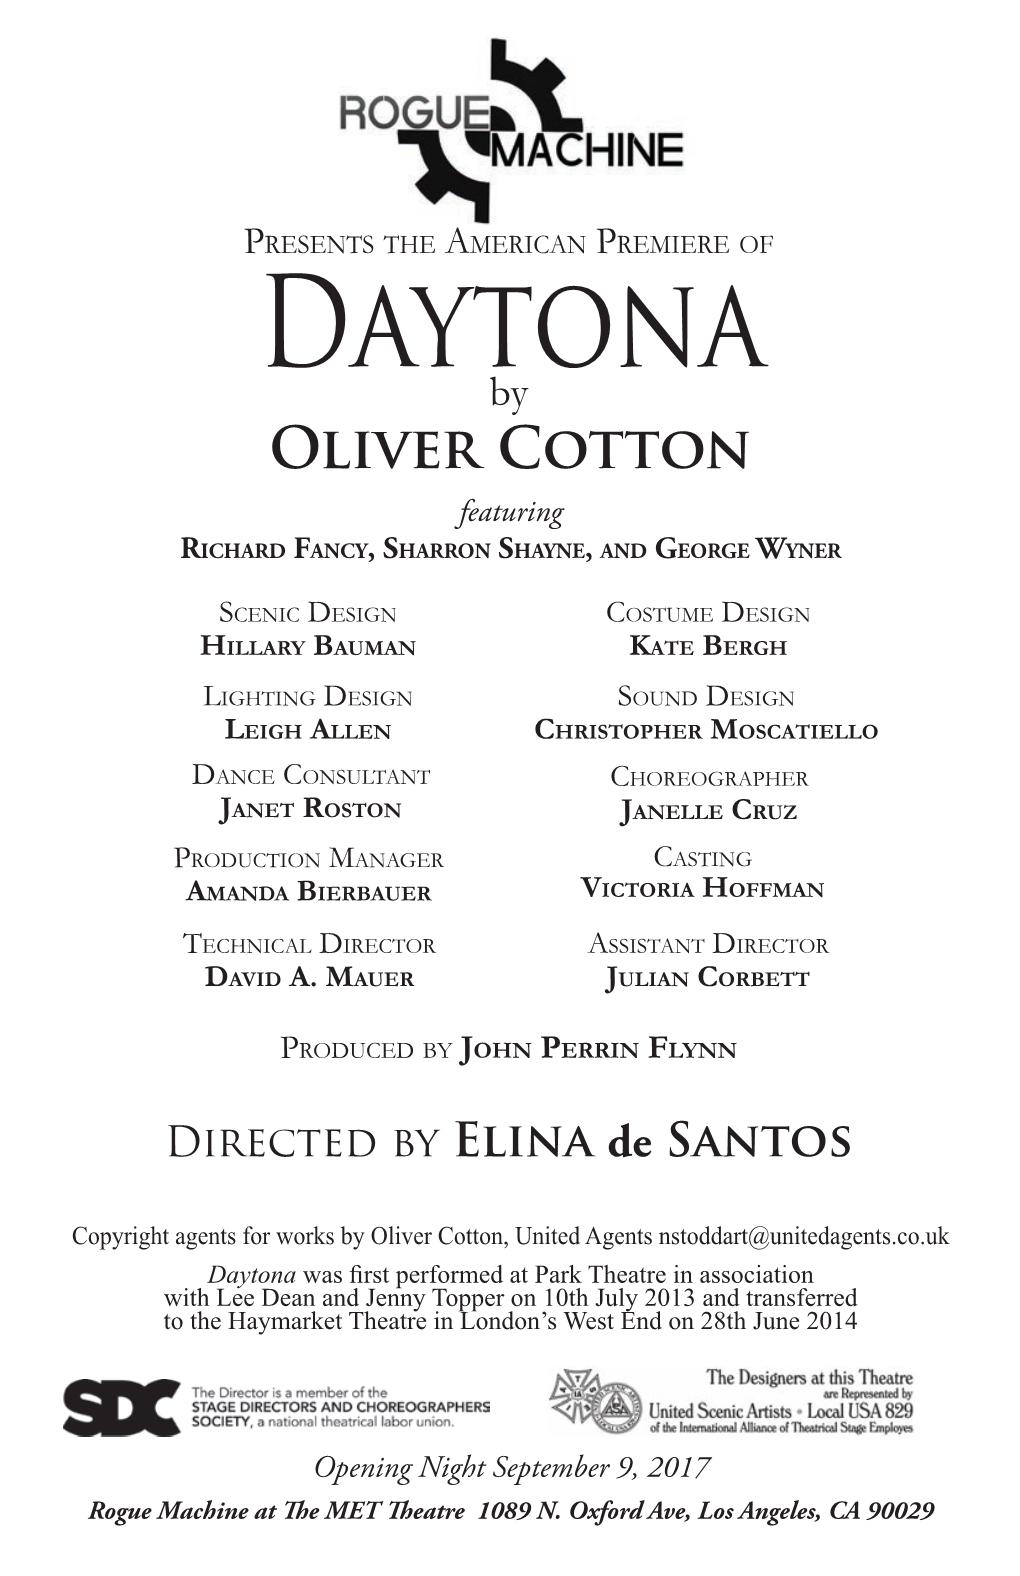 Daytonaby Oliver Cotton Featuring RICHARD FANCY, SHARRON SHAYNE, and GEORGE WYNER